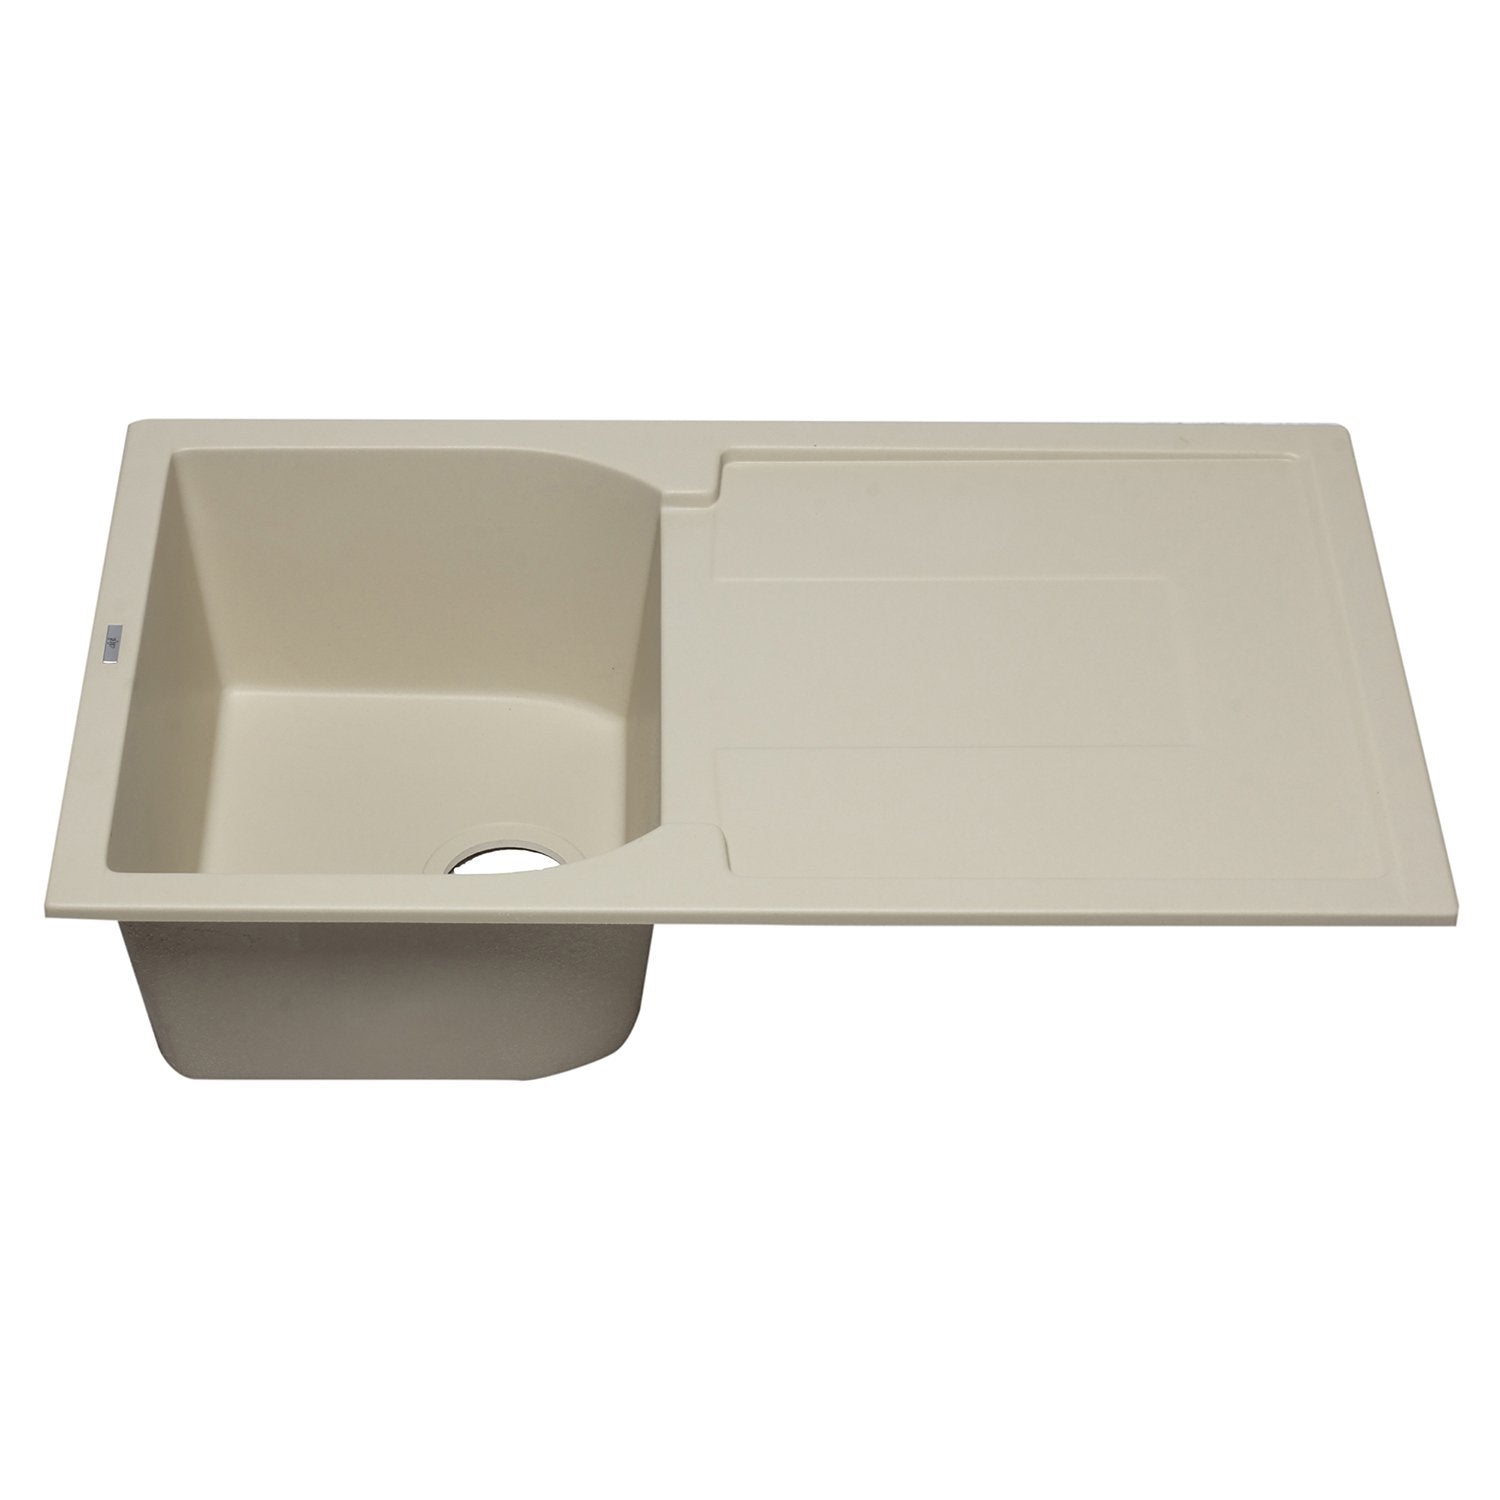 ALFI, ALFI AB1620DI-B Biscuit 34" Single Bowl Granite Composite Sink with Drainboard